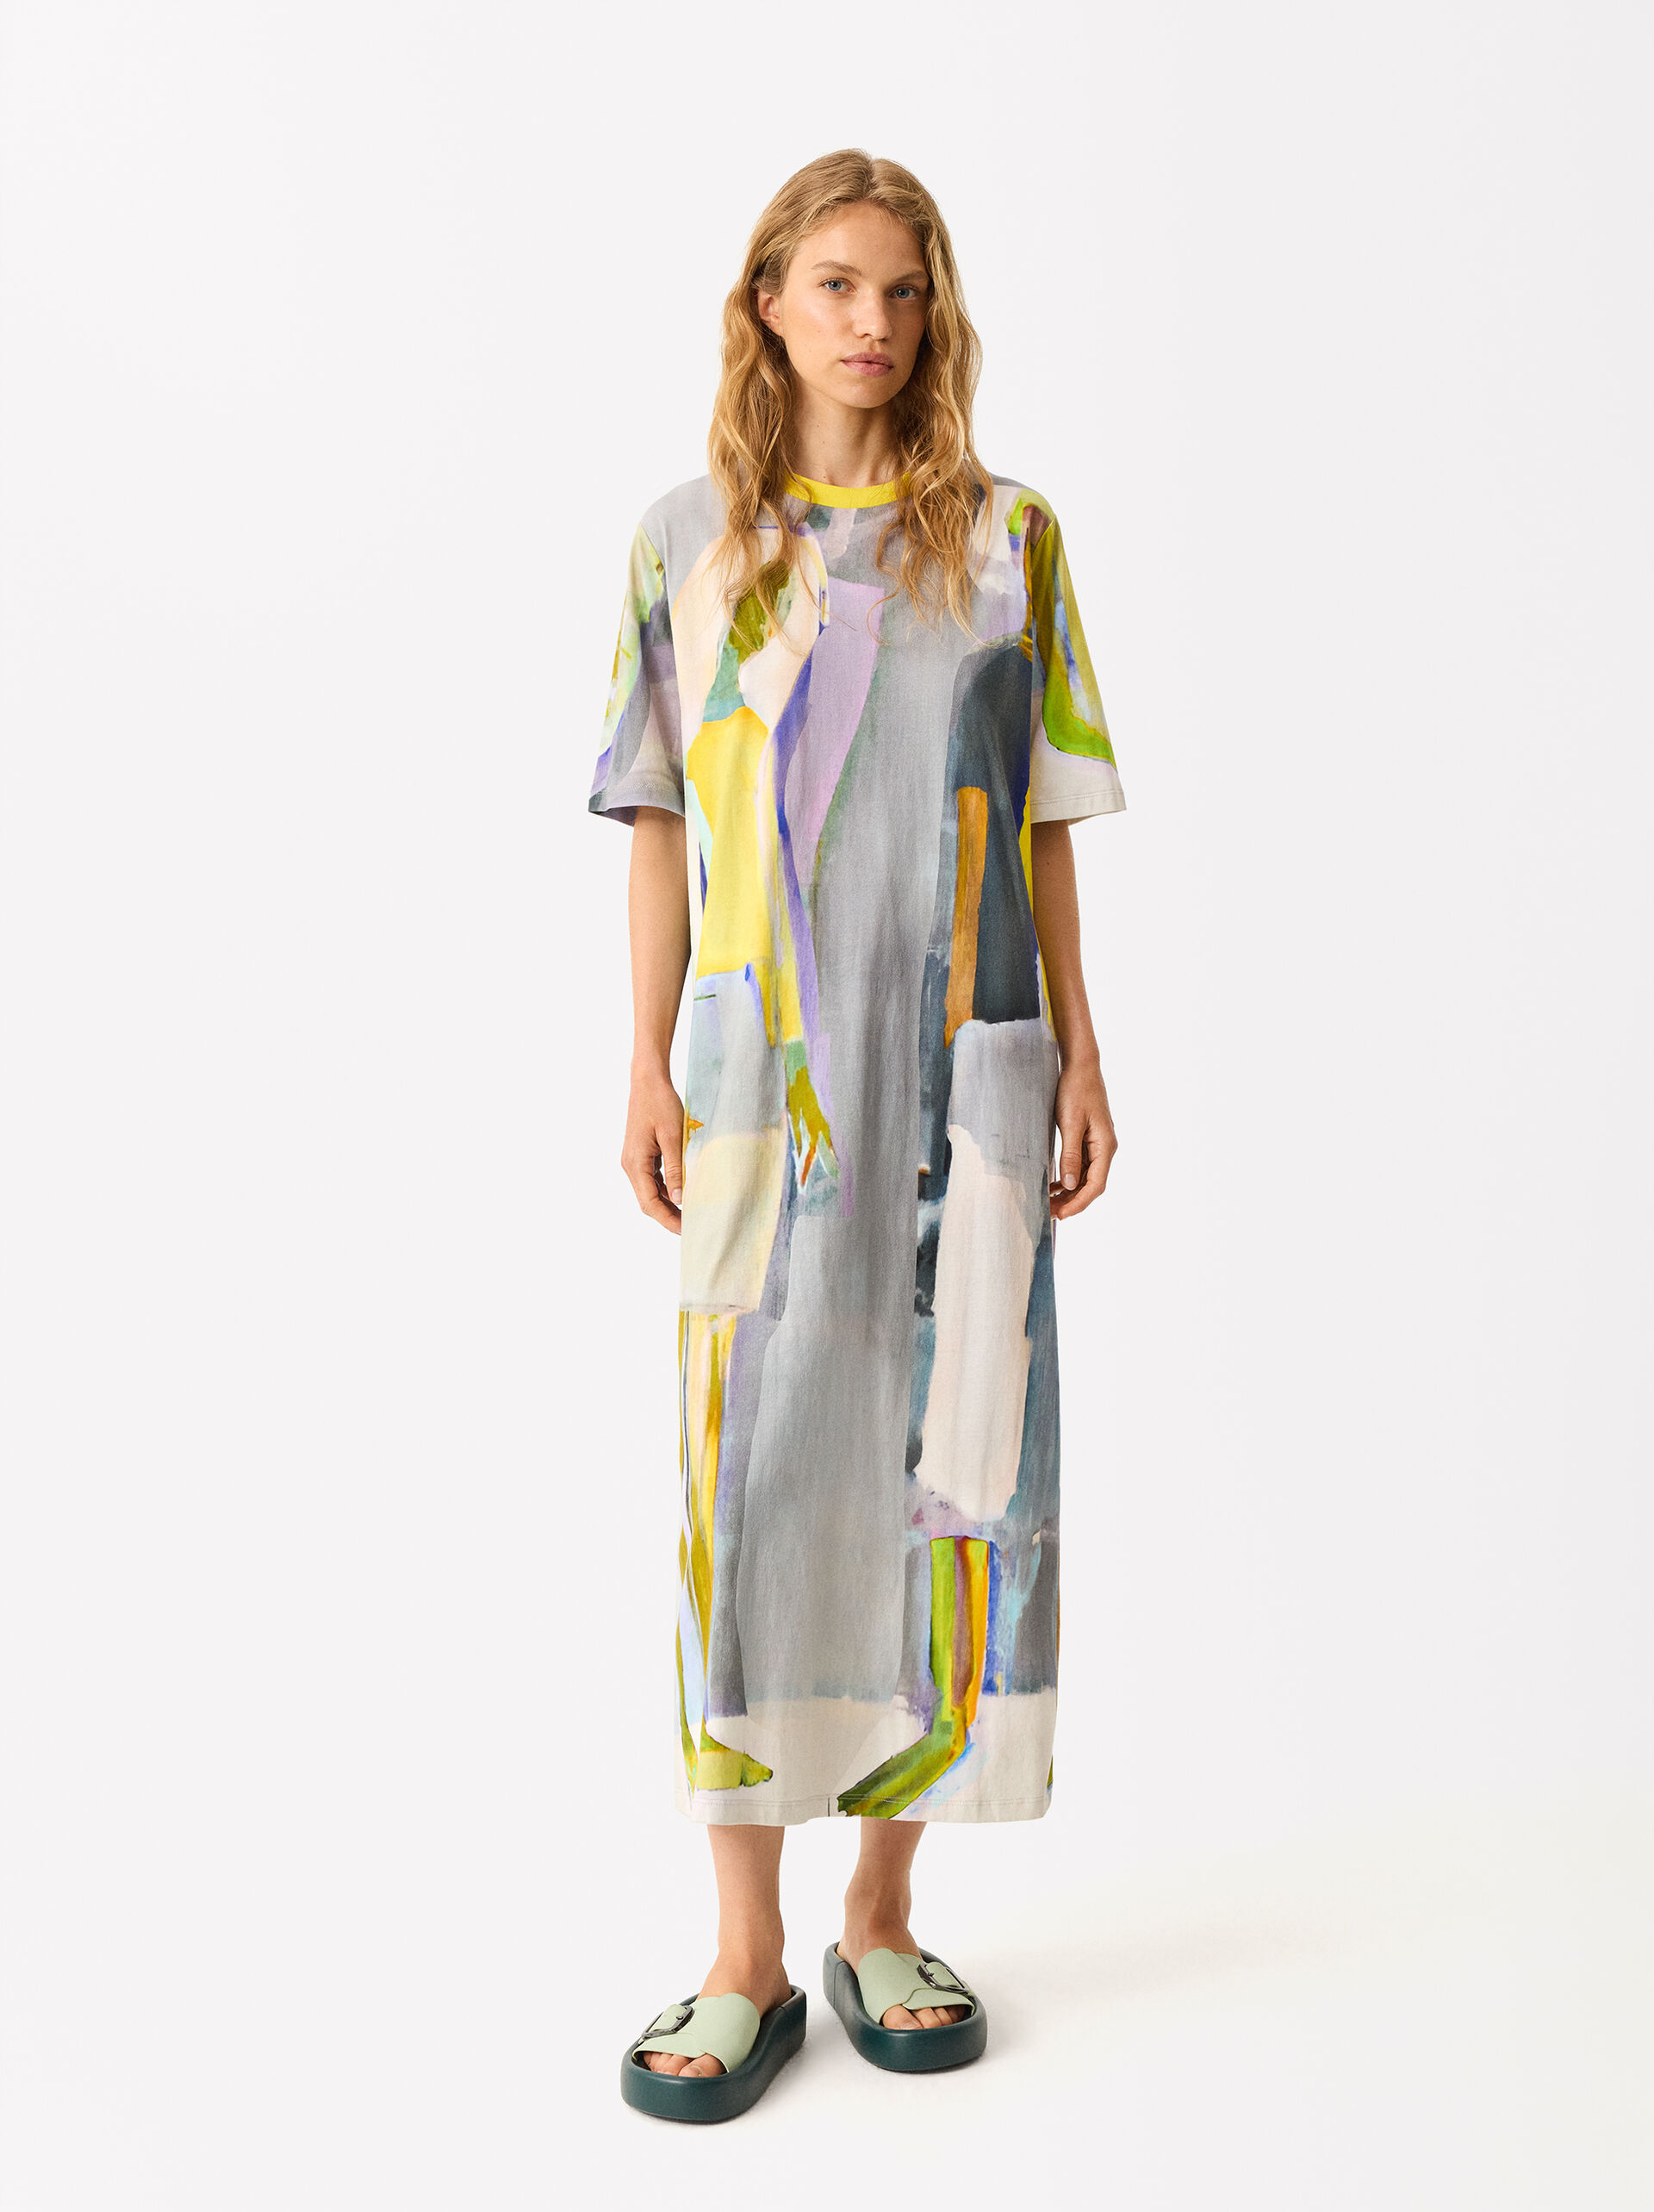 Online Exclusive - Kleid Aus Bedruckter Baumwolle image number 0.0